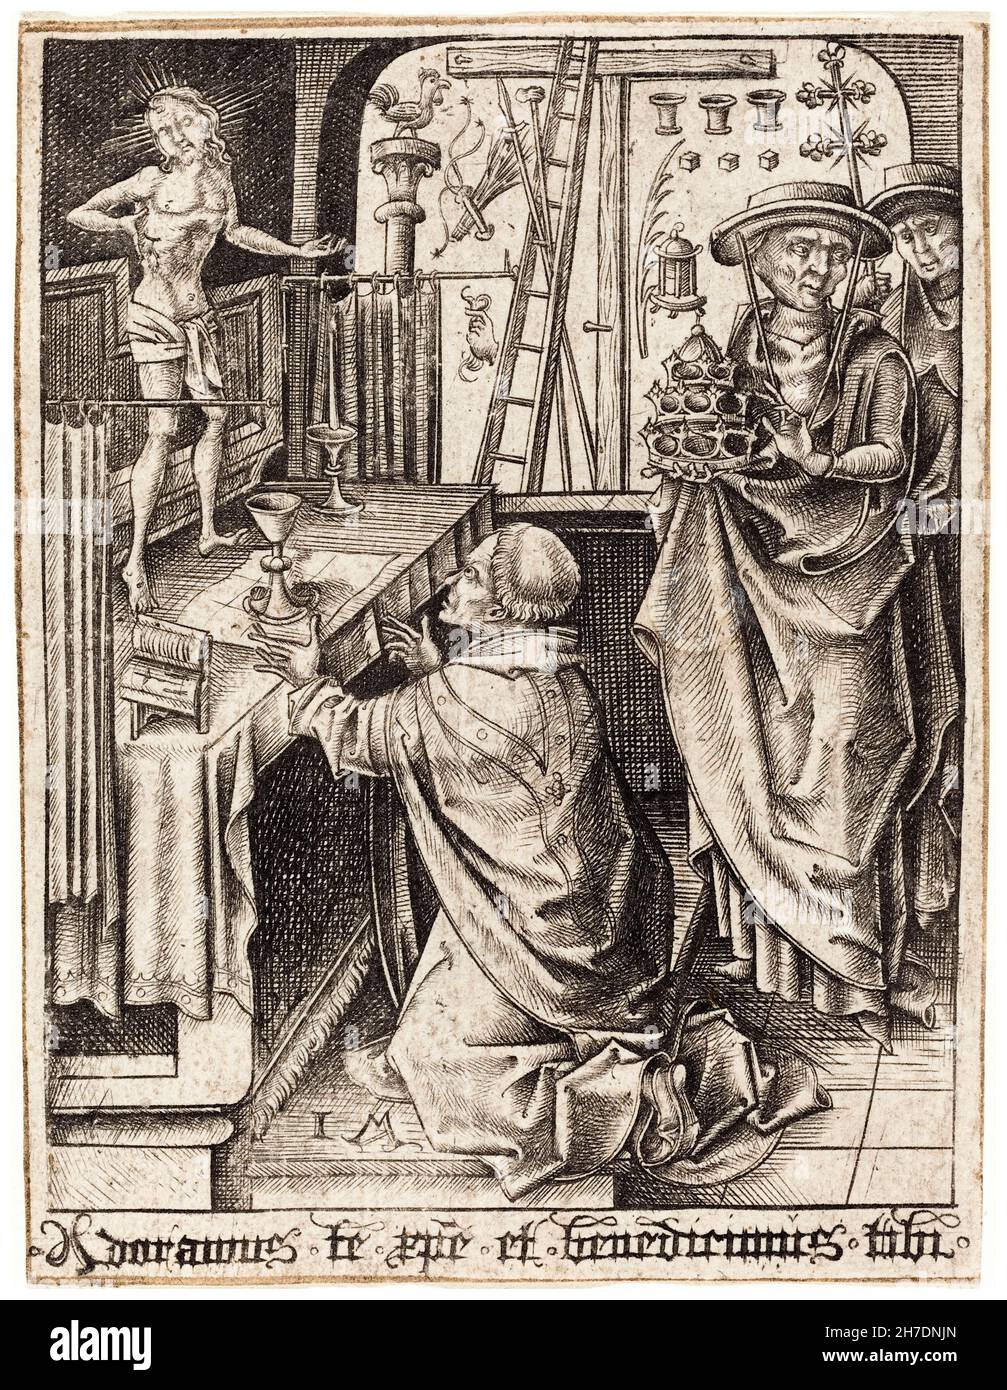 Israhel van Meckenem, The Mass of St Gregory, engraving, 1480-1490 Stock Photo